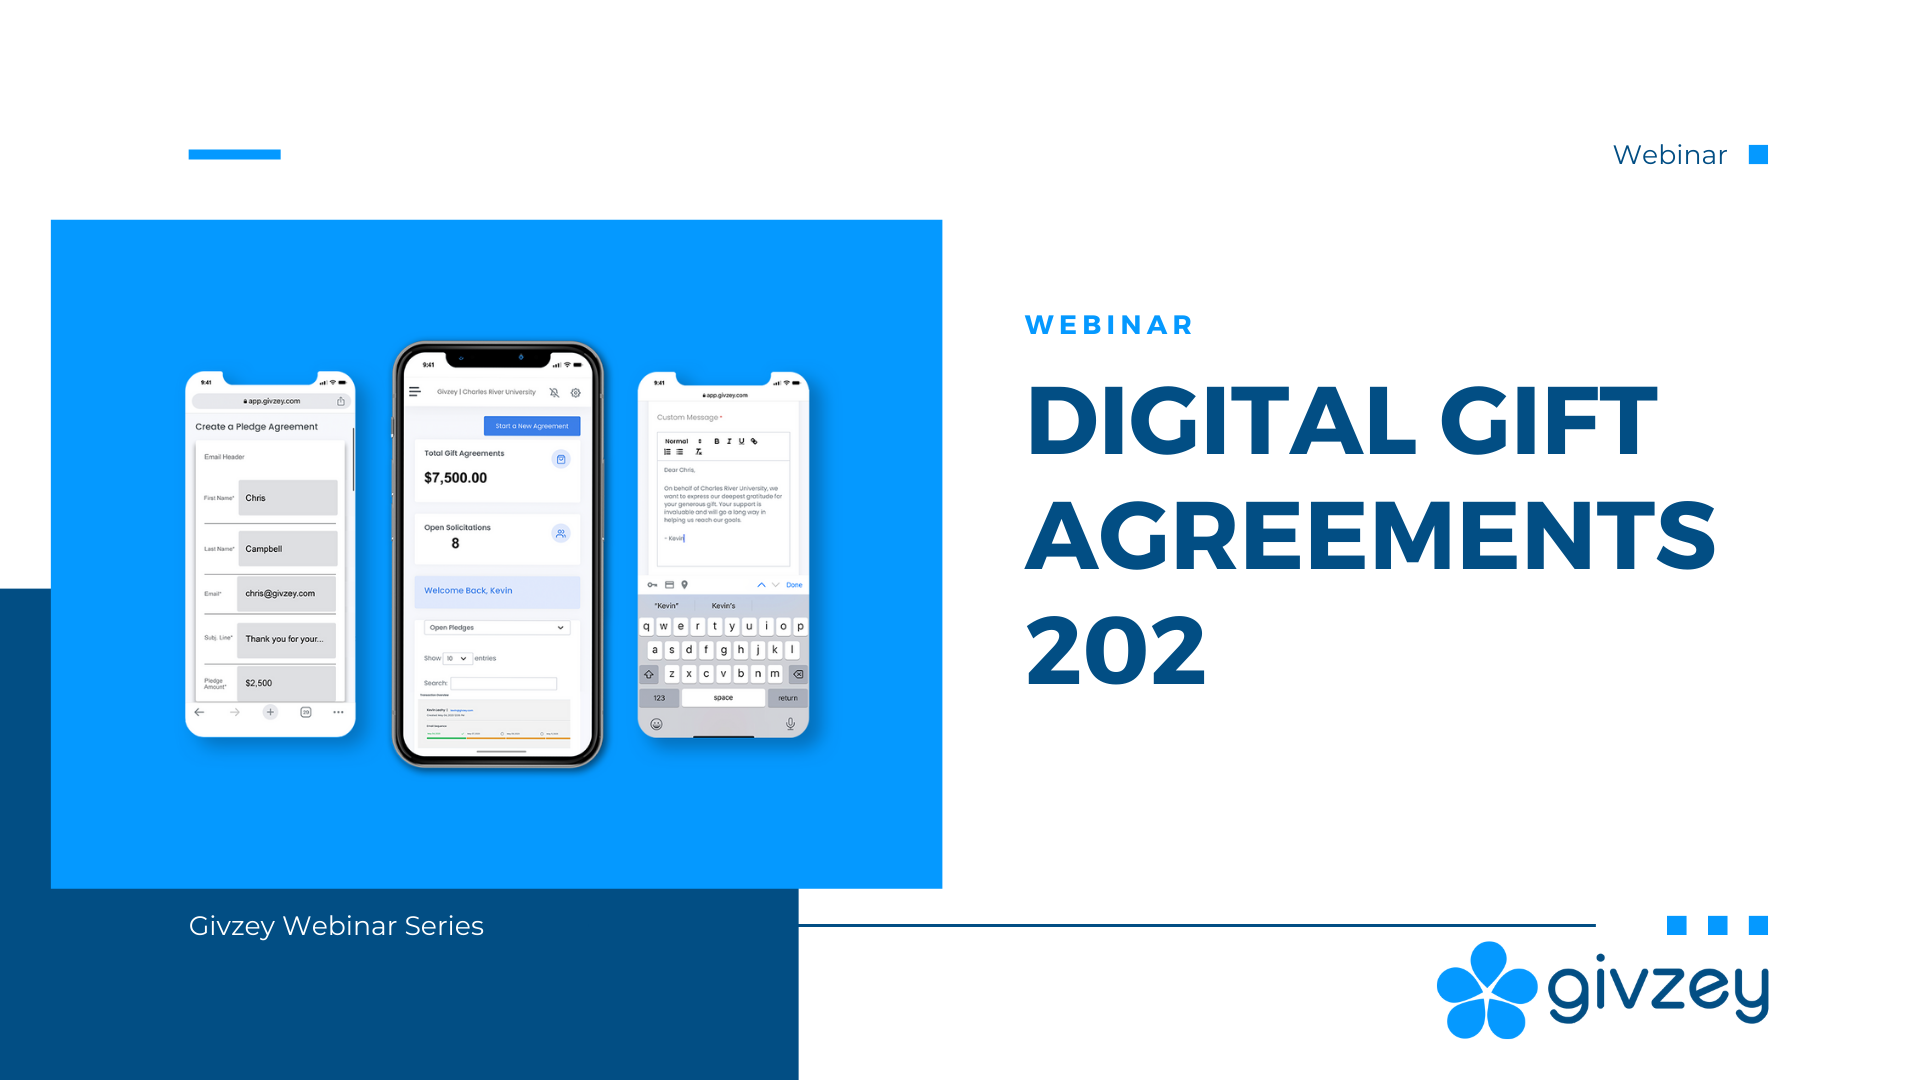 Webinar Digital Gift Agreements 202